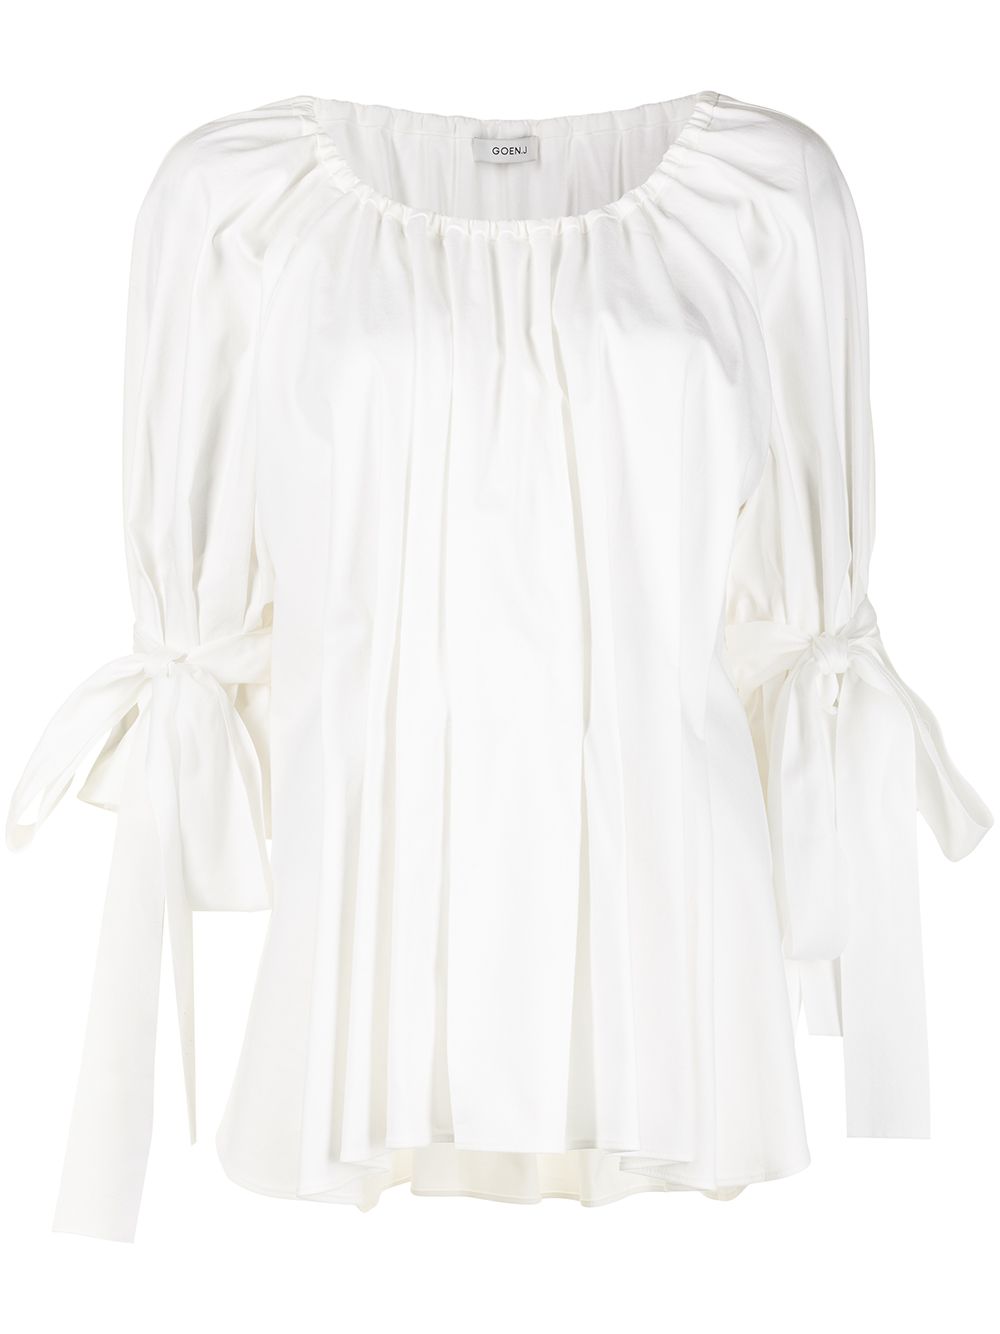 Goen.J pleated peplum blouse - White von Goen.J